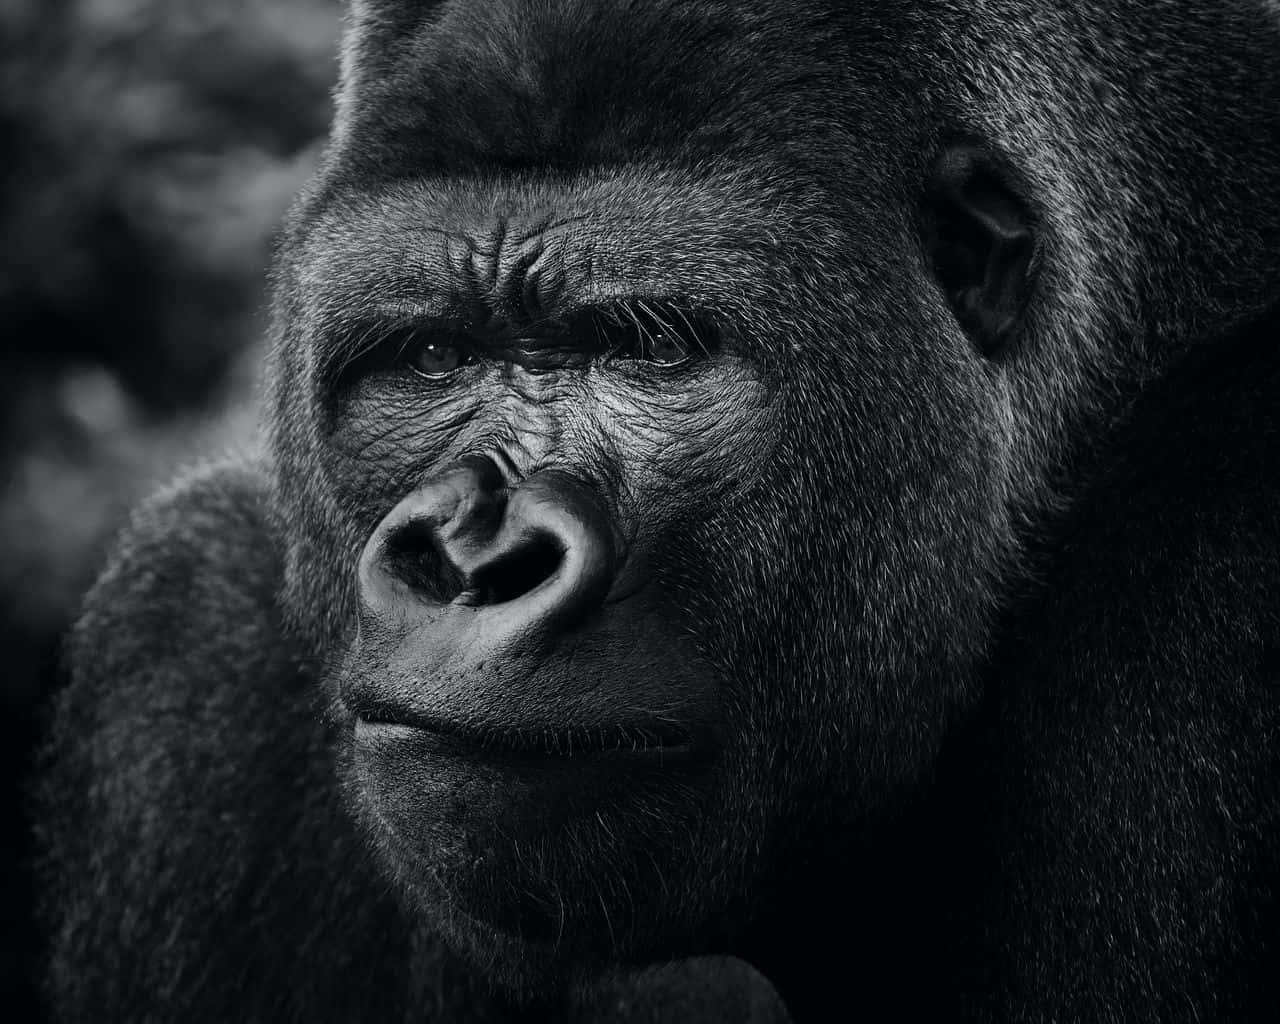 Look at this adorable baby gorilla! Wallpaper